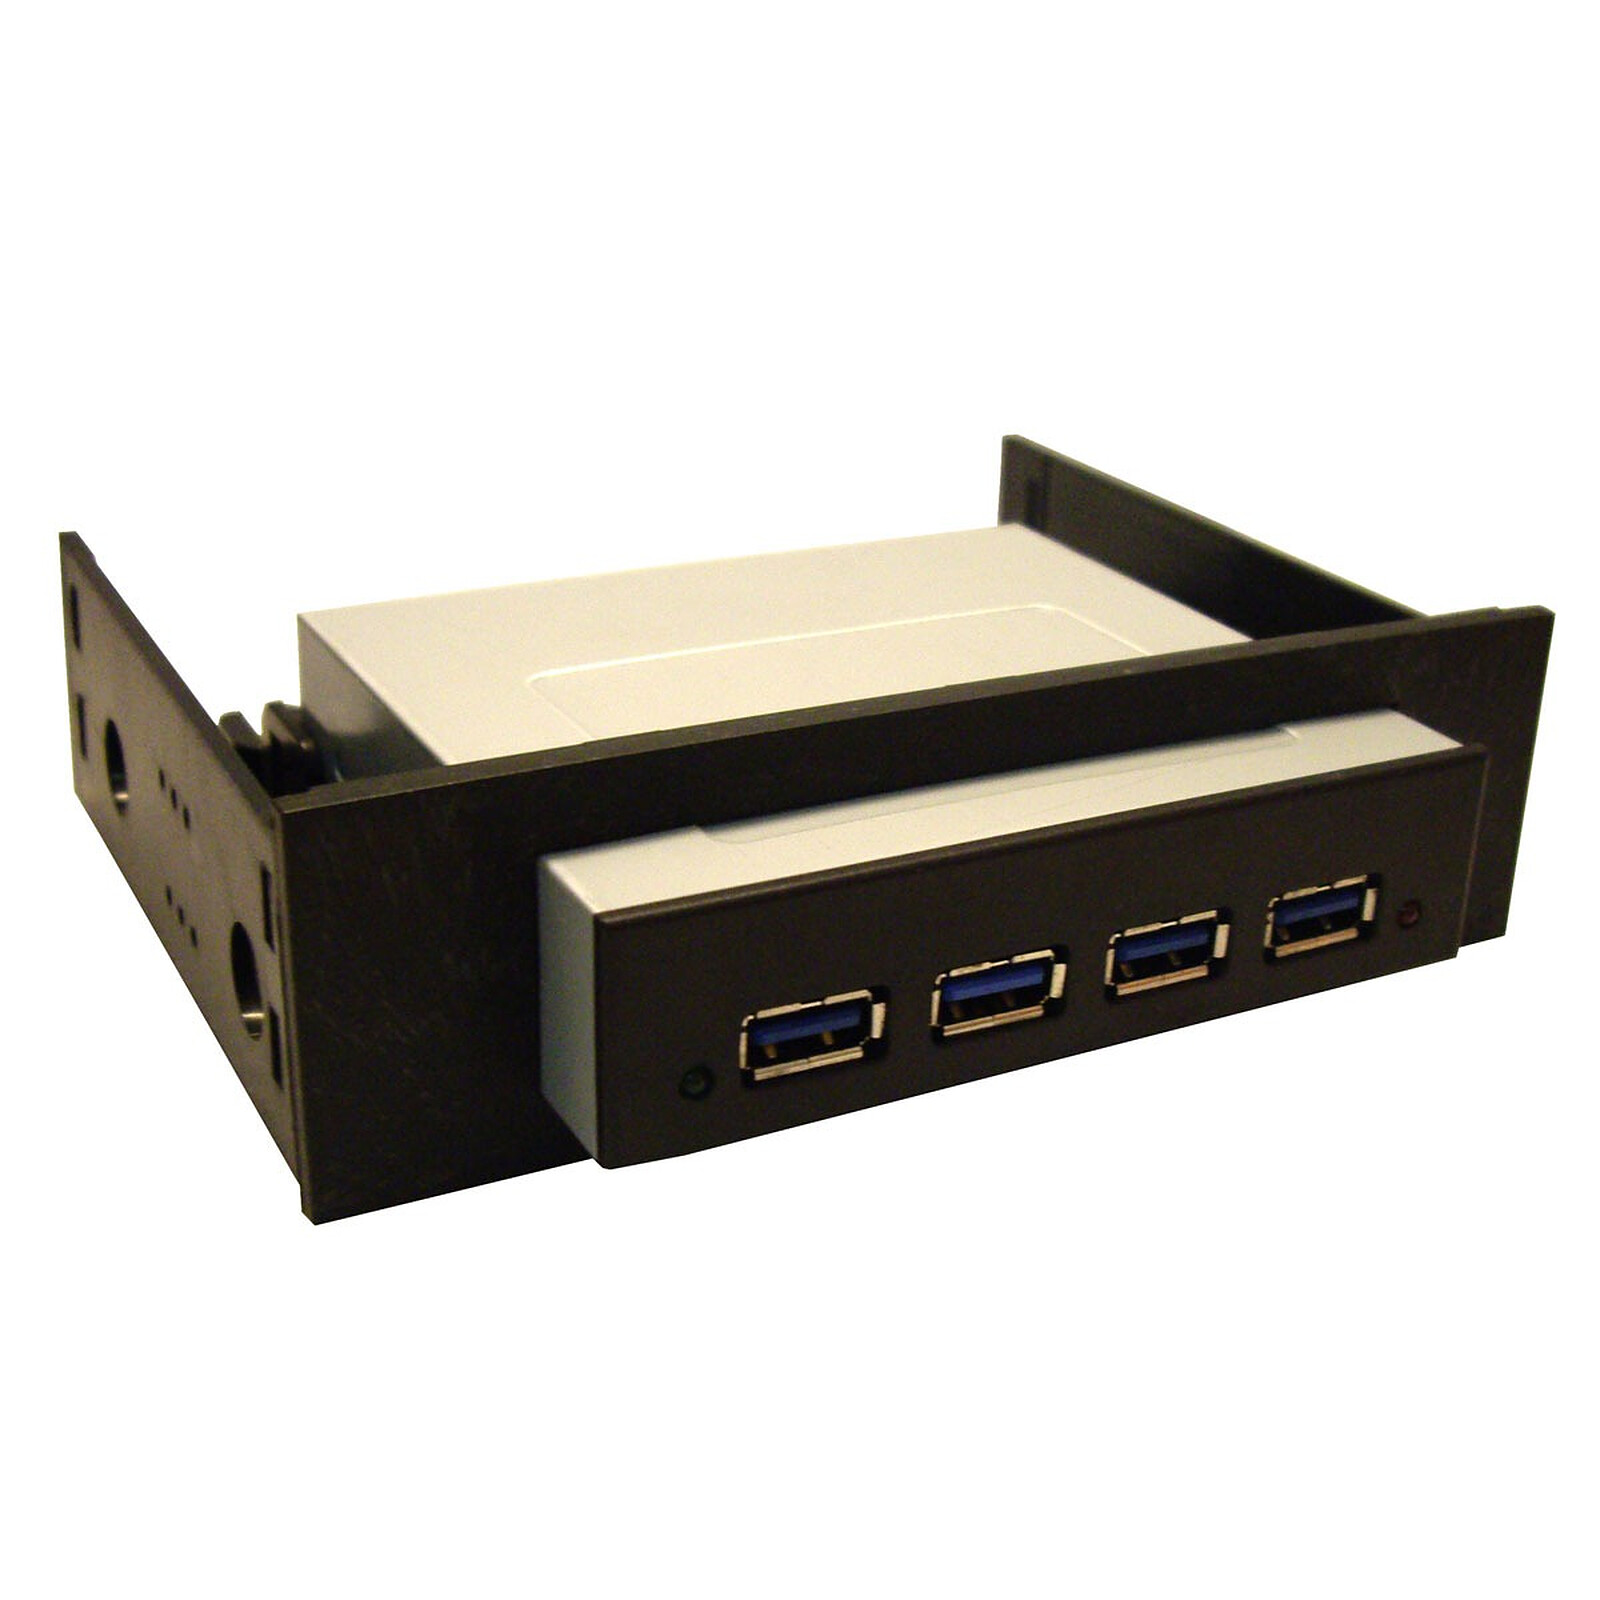 Stock Bureau - NEDIS Hub USB 8 Ports Alimentation USB 3.0 QC3.0 5